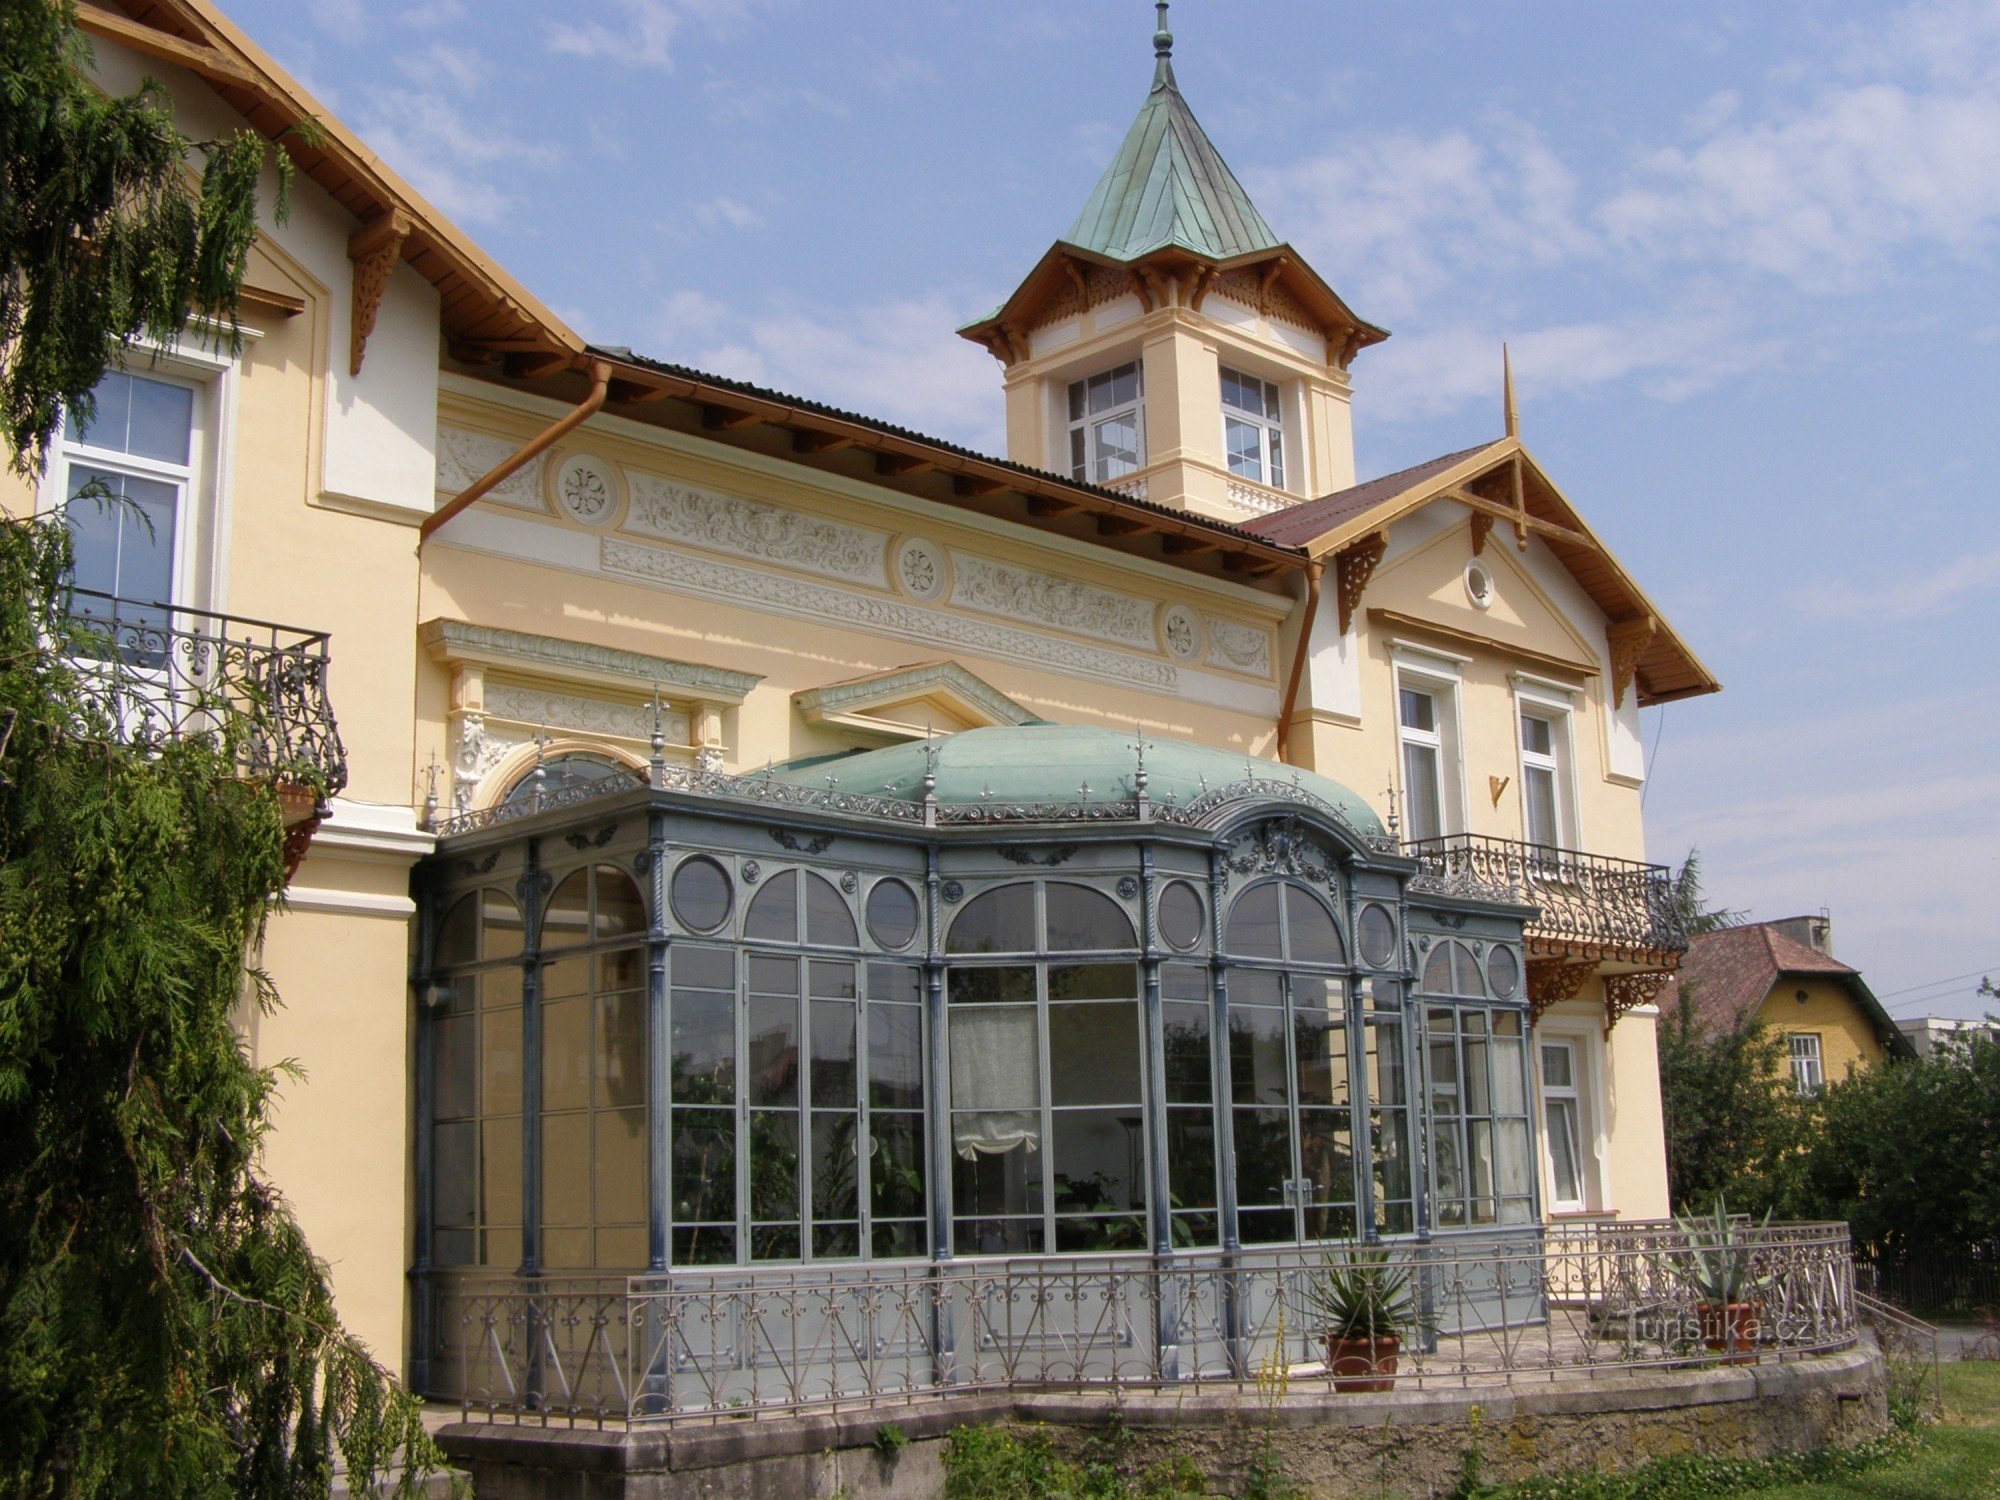 Javorník - museum, byens kulturcenter